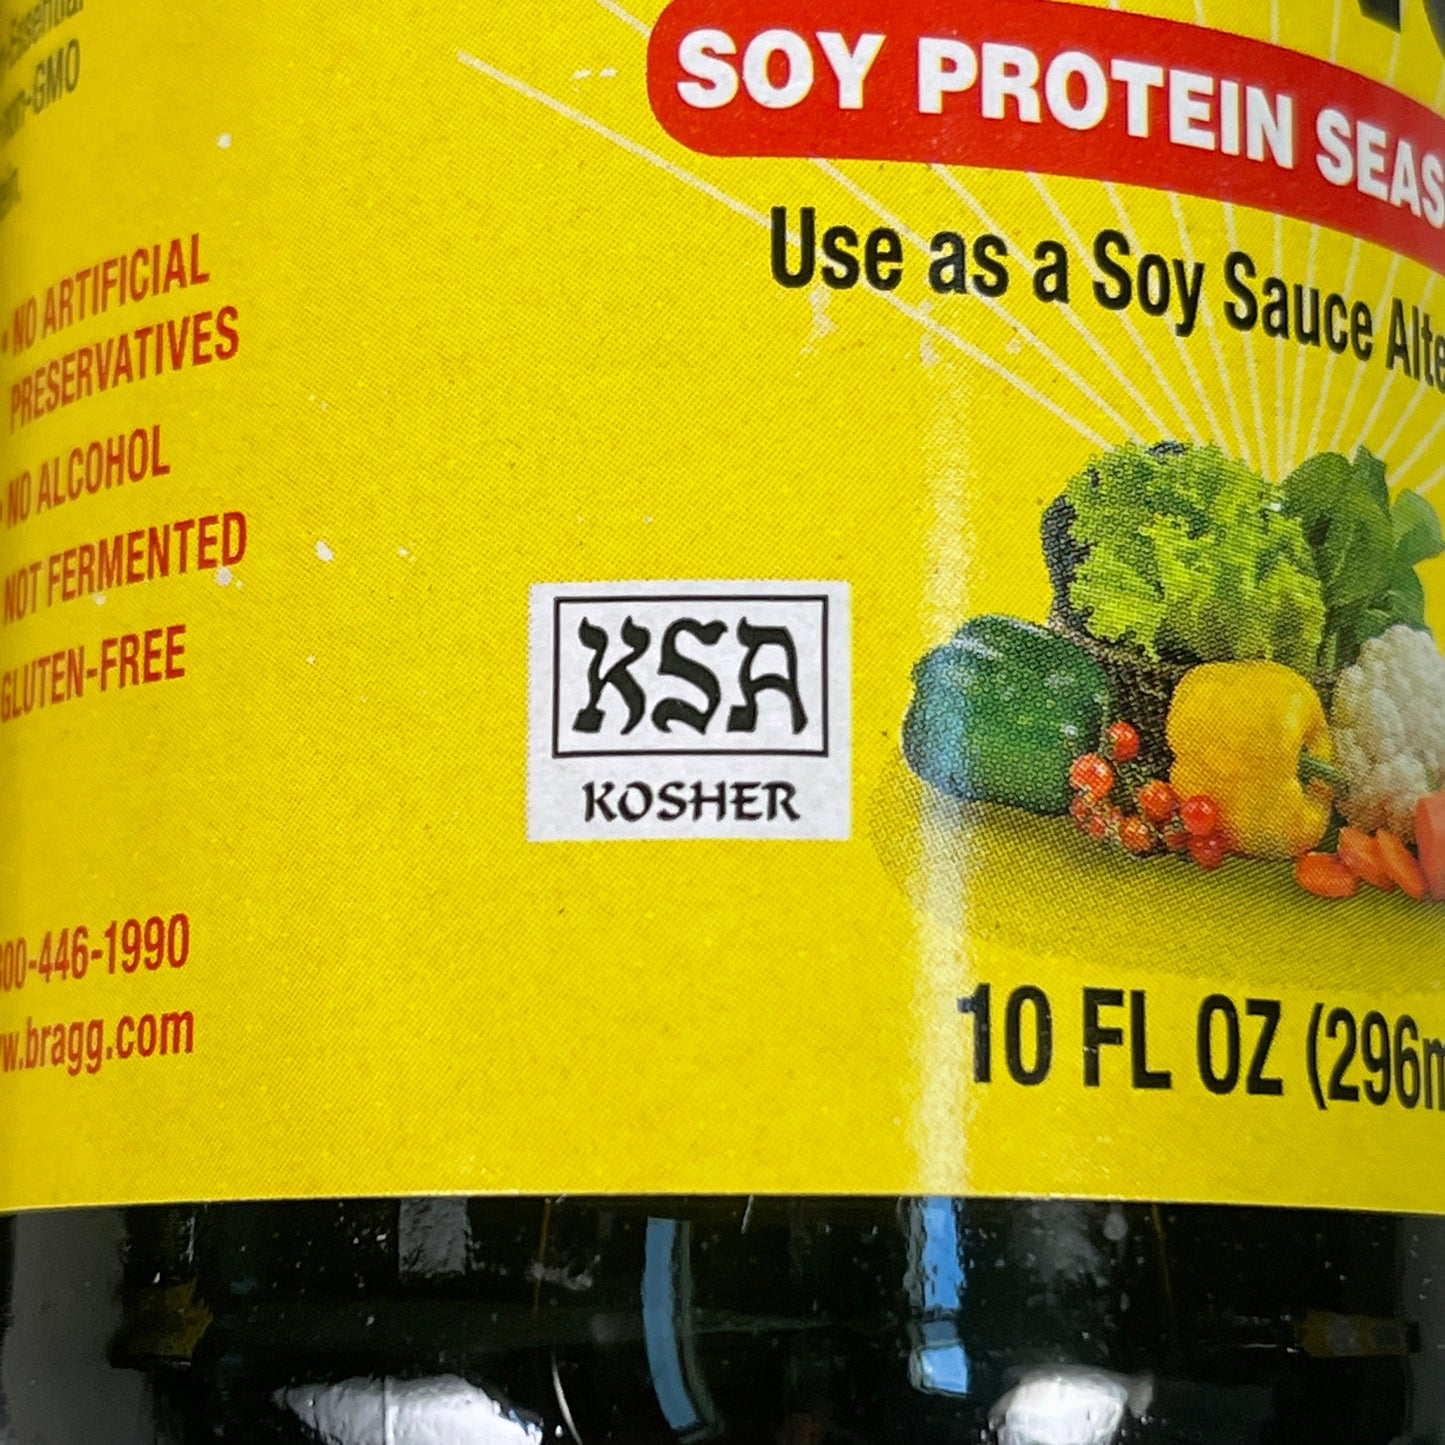 ZA@ BRAGG Liquid Aminos Soy Protein Seasoning Soy Sauce Alternative 10 fl oz Exp 2024 (New)